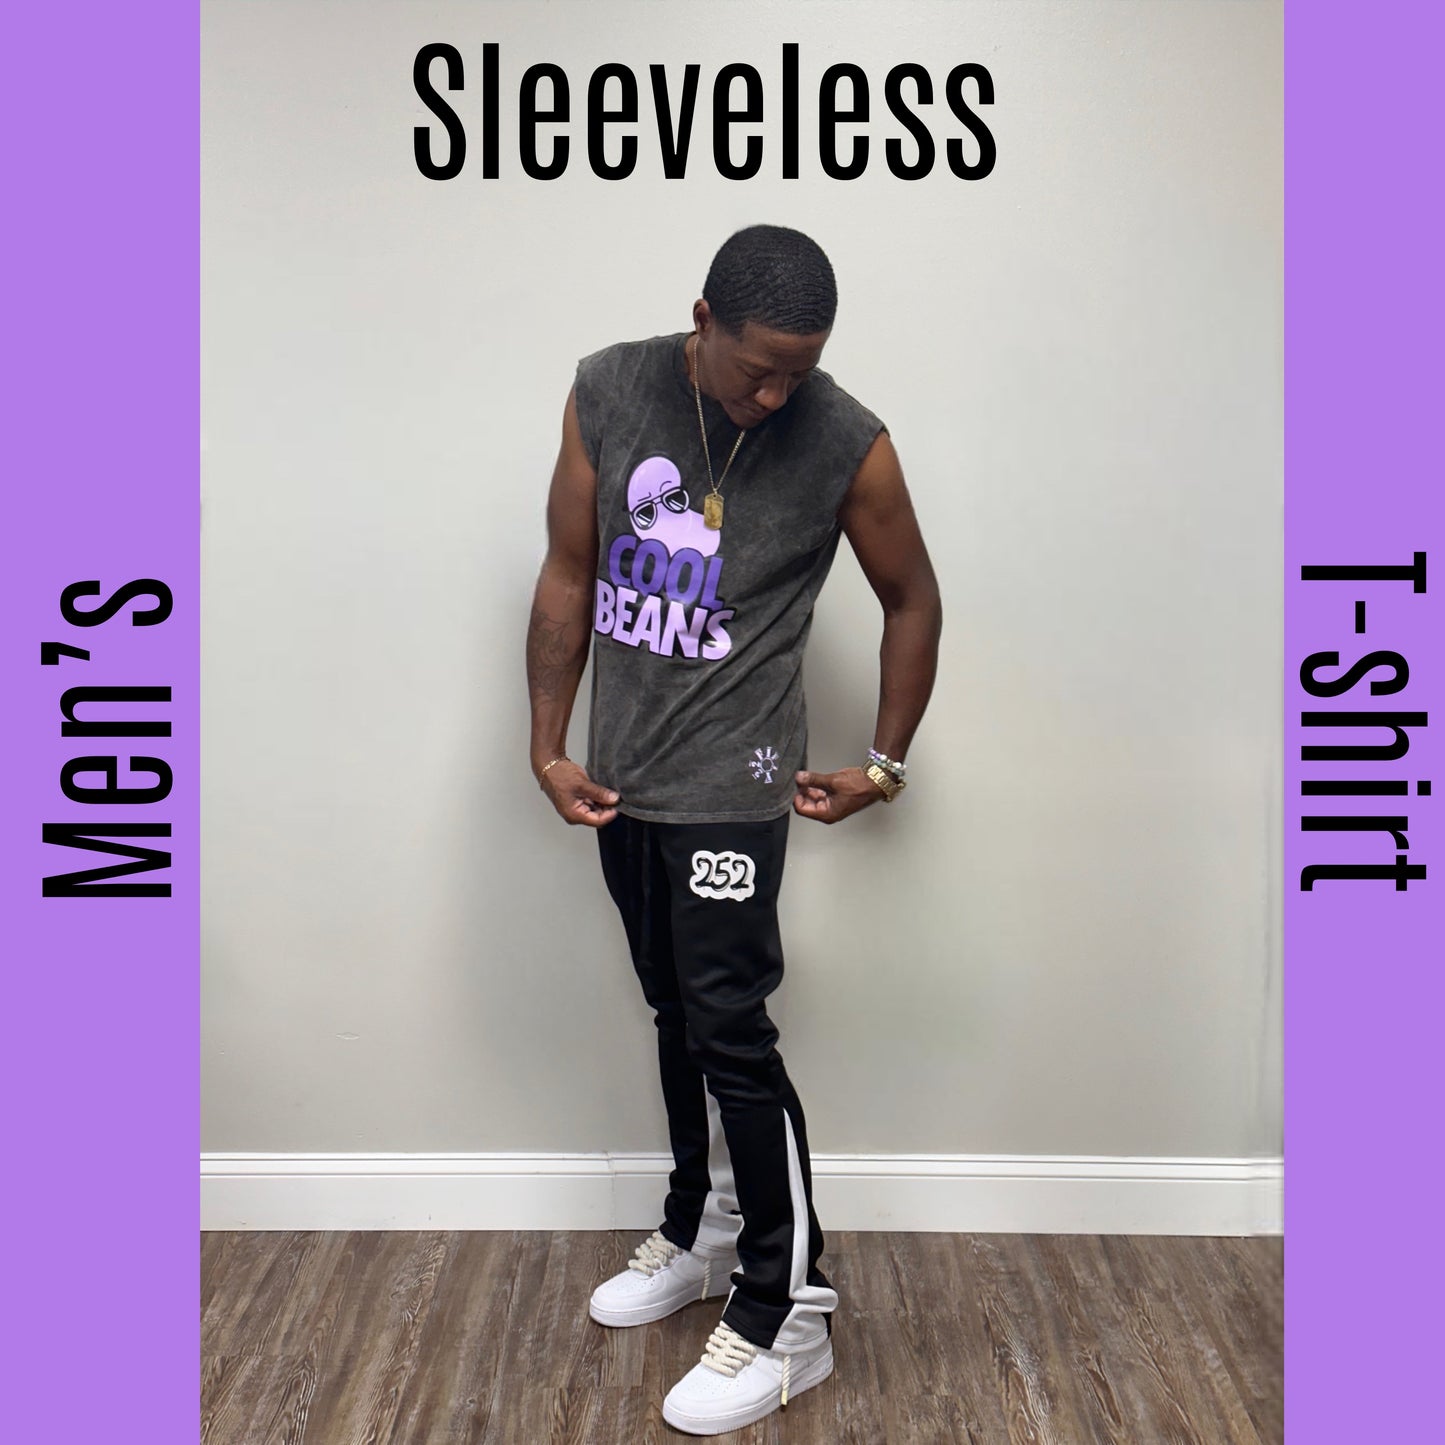 Men’s sleeveless t-shirt